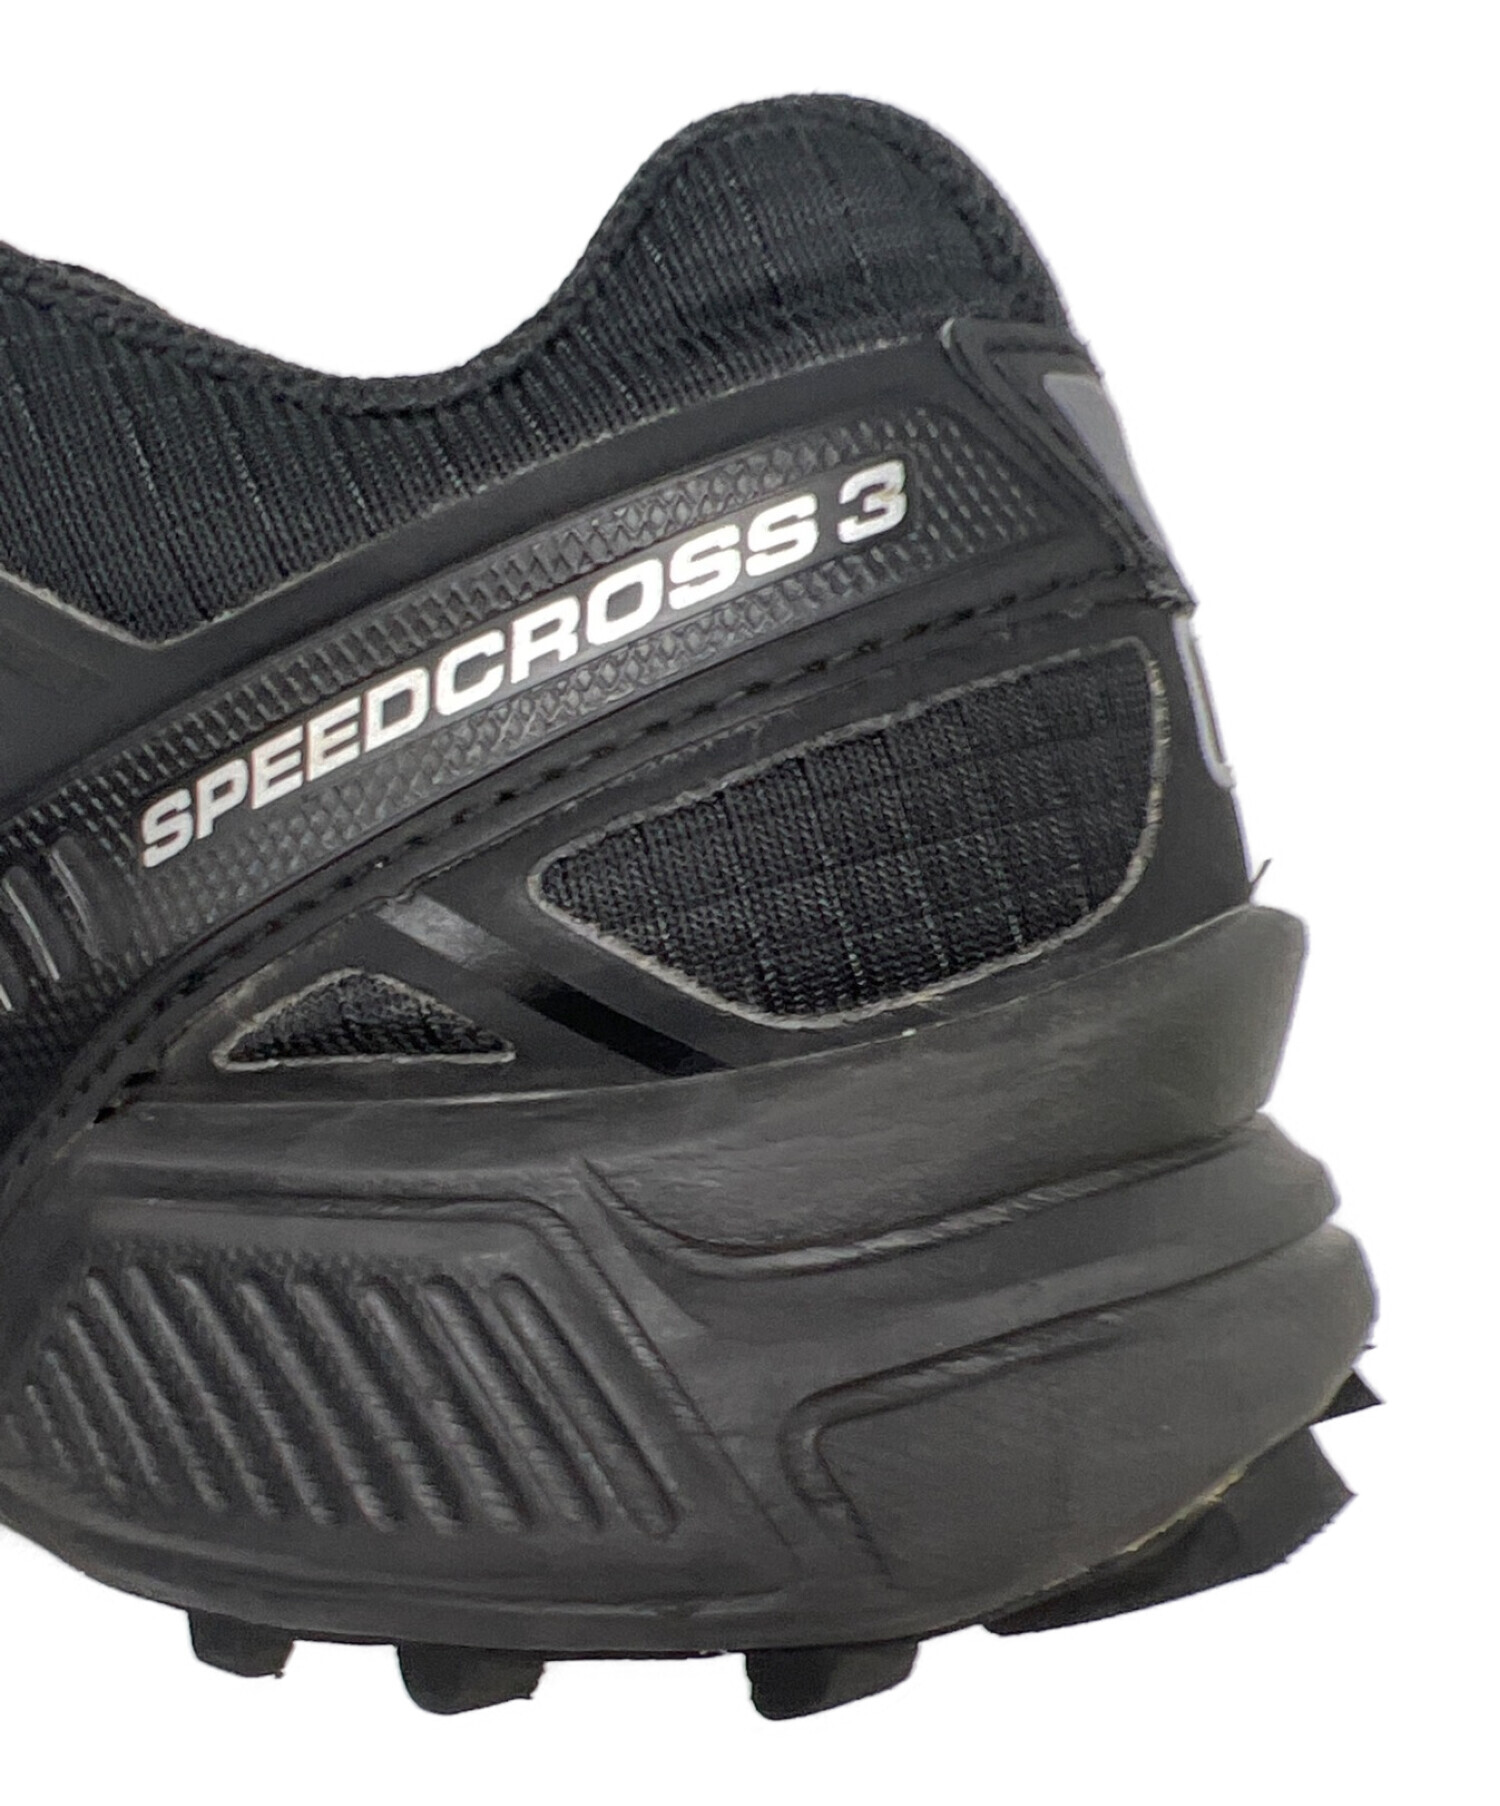 SALOMON (サロモン) Speedcross 3 ブラック サイズ:26.5CM